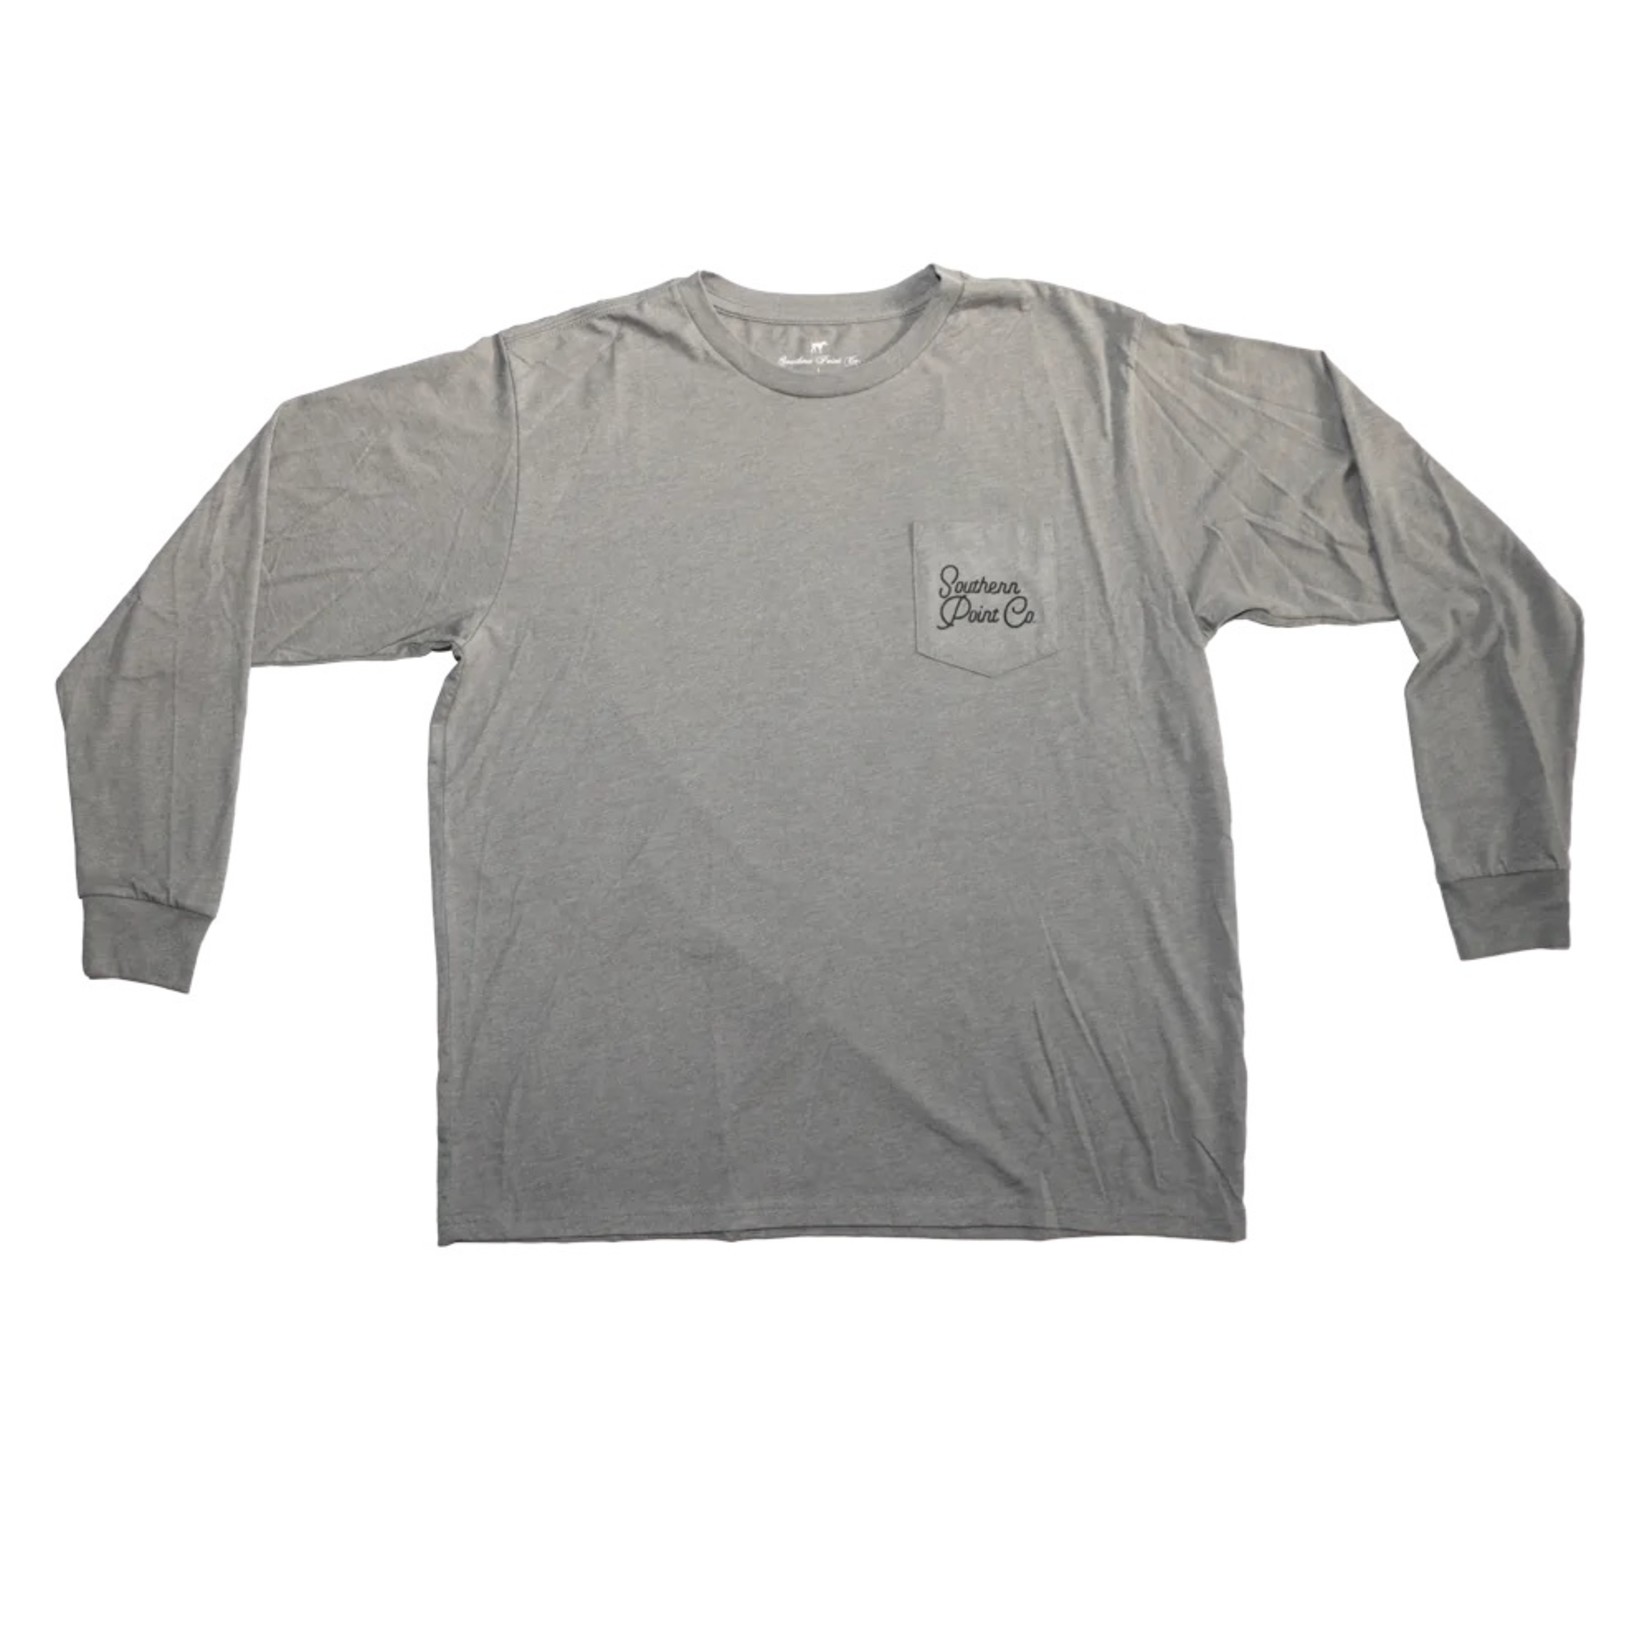 Southern Point Field Greyton Long Sleeved T-shirt